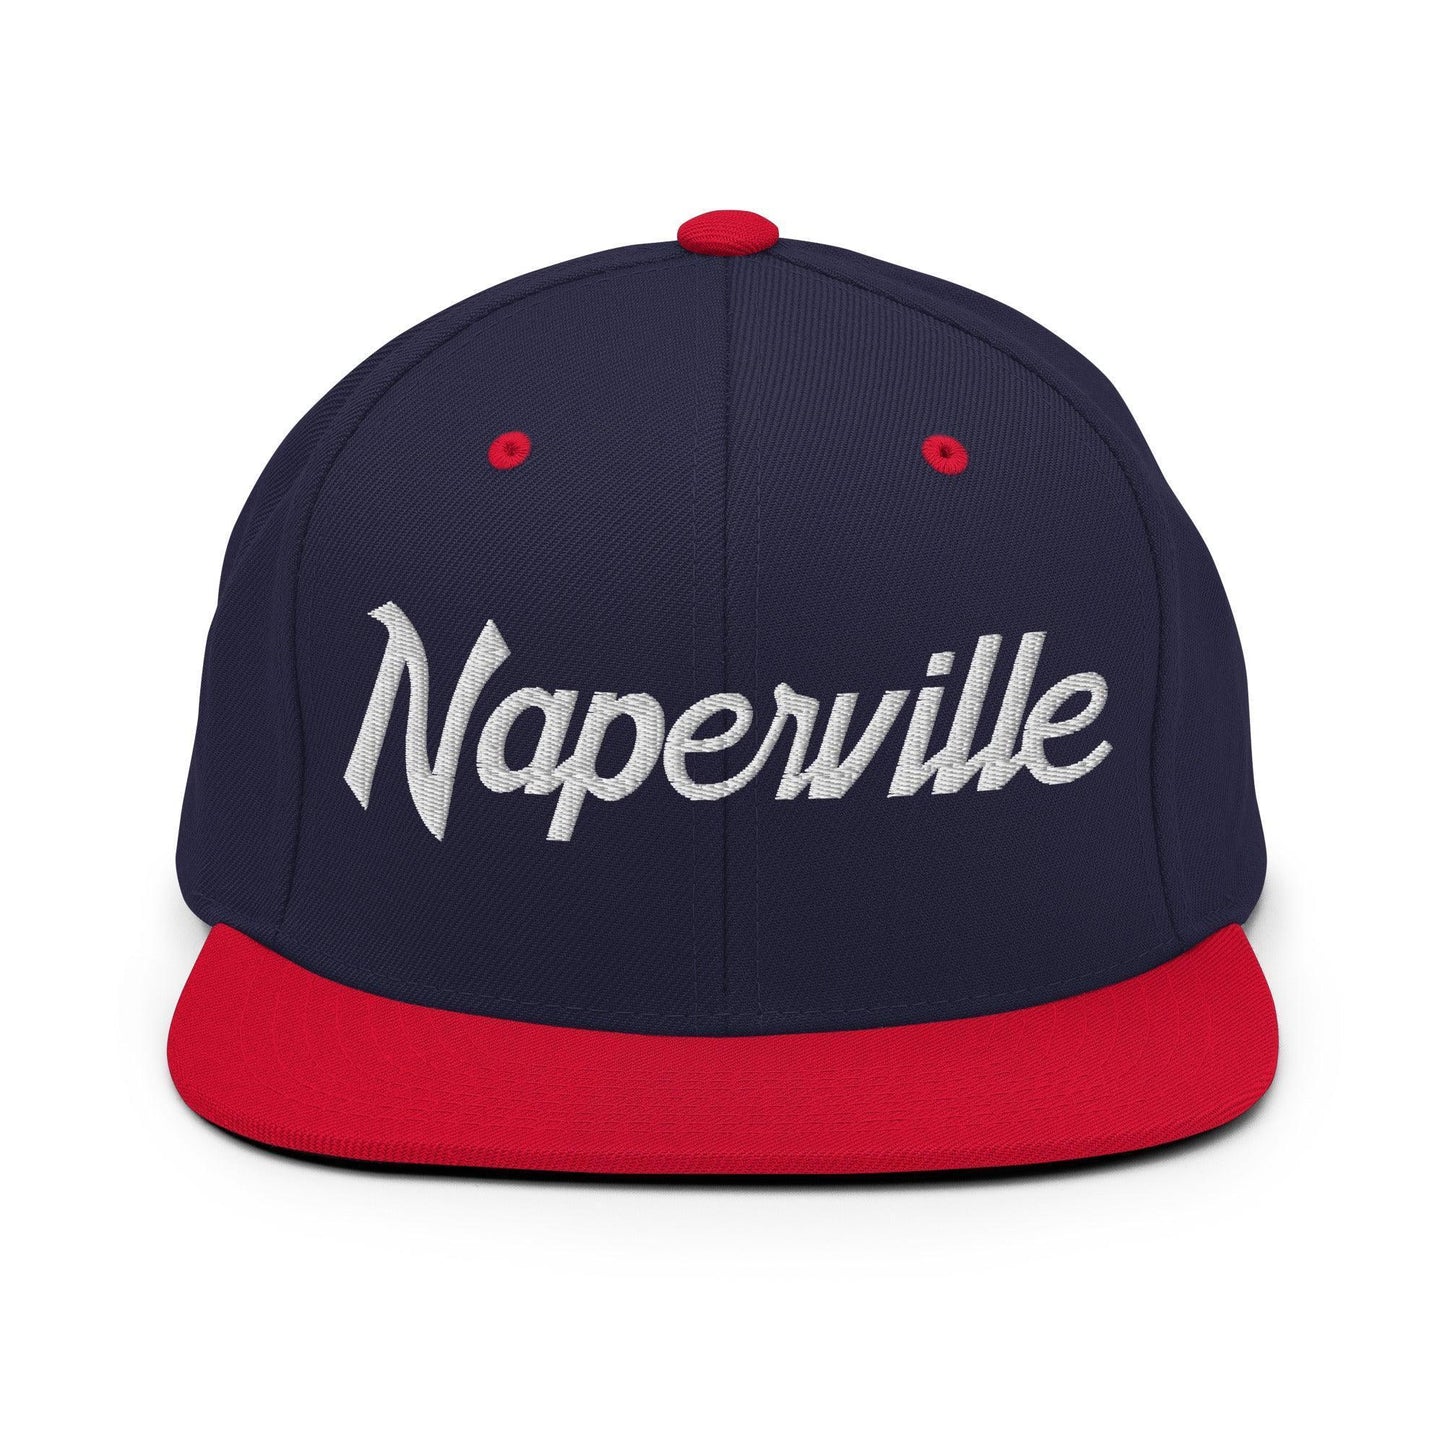 Naperville Script Snapback Hat Navy Red